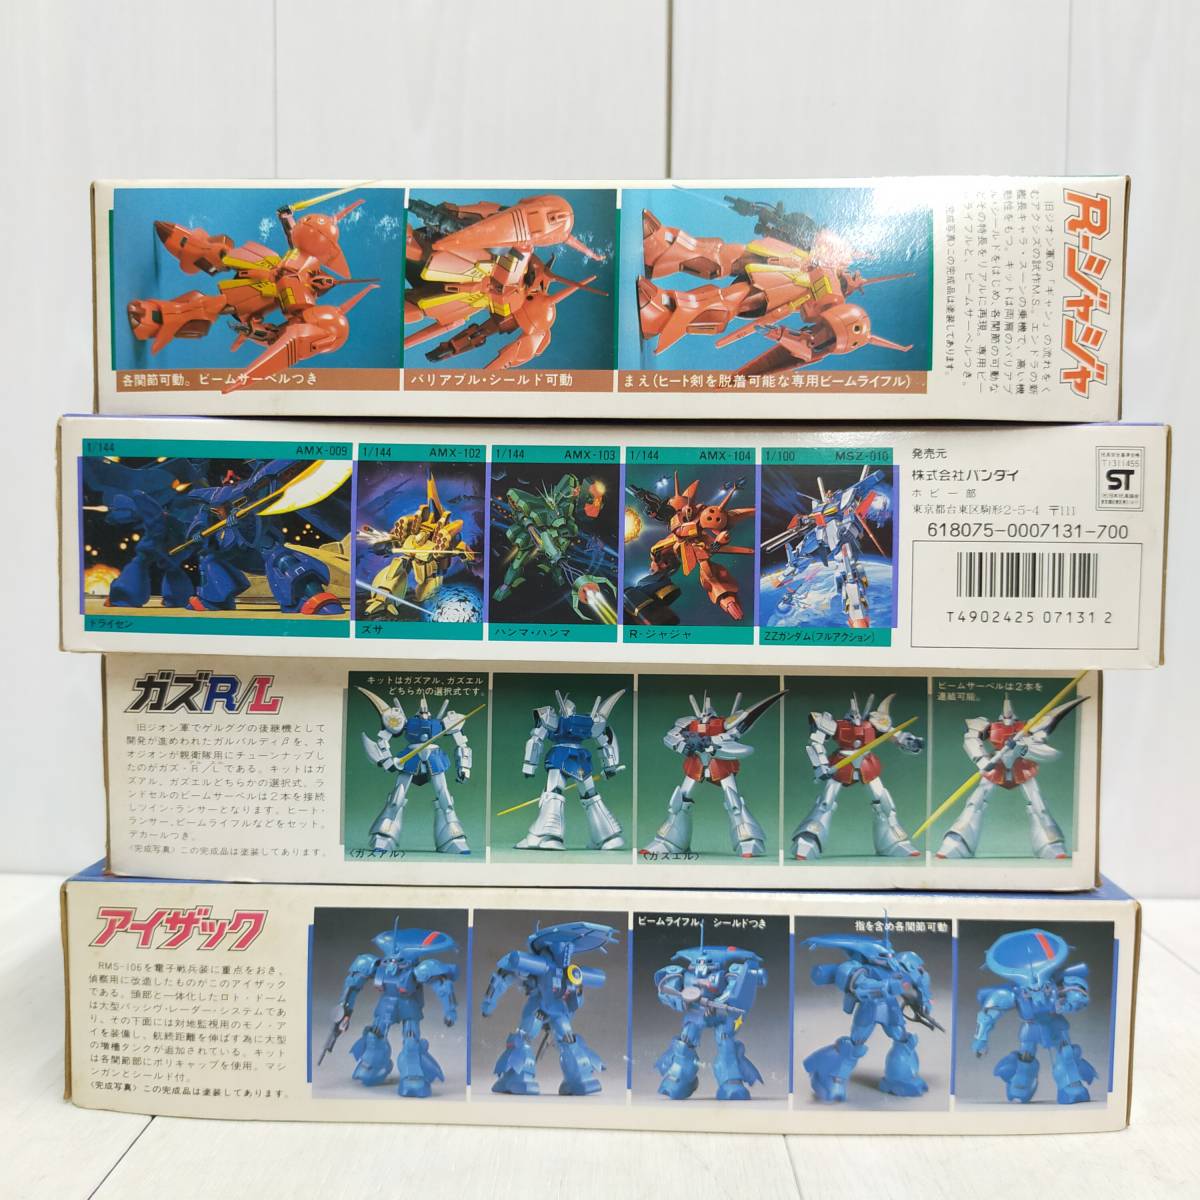 [ free shipping ] not yet constructed * Bandai Mobile Suit Gundam ZZ R-jaja jam ru* fins gazR/L Isaac 1/144 scale gun pra model 